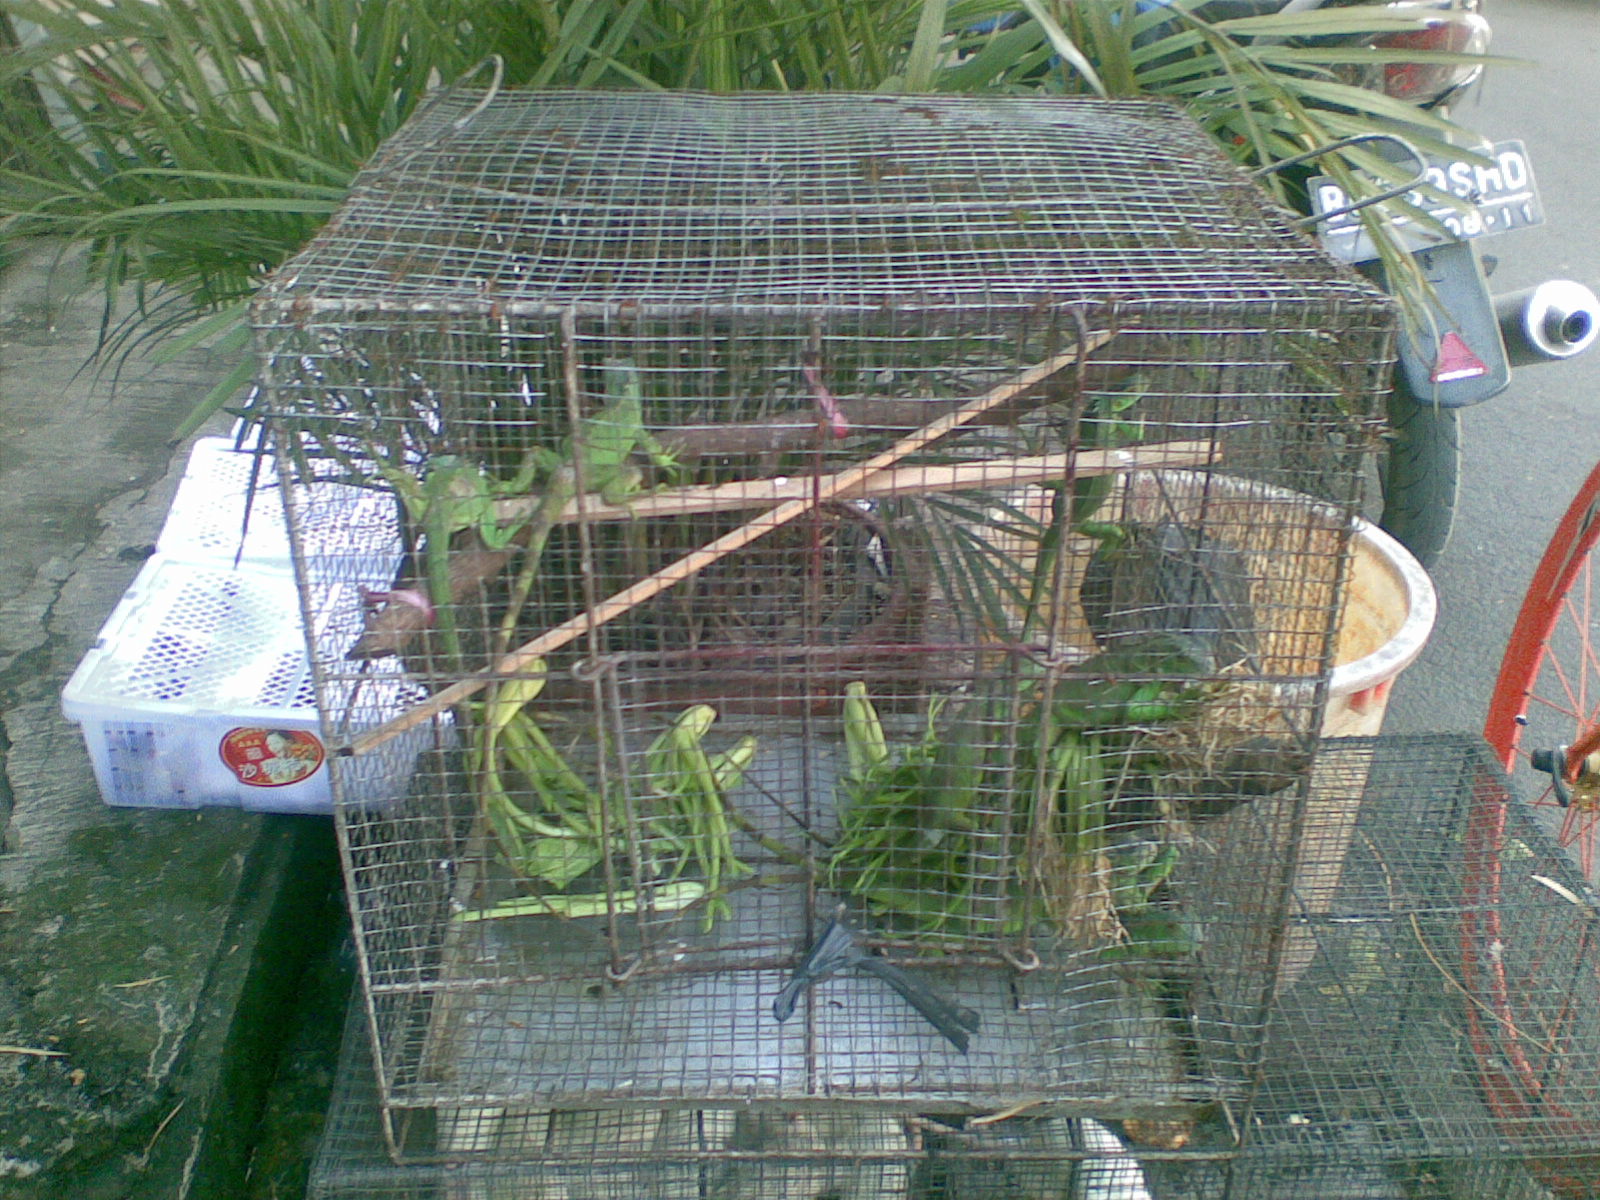 iguana papua